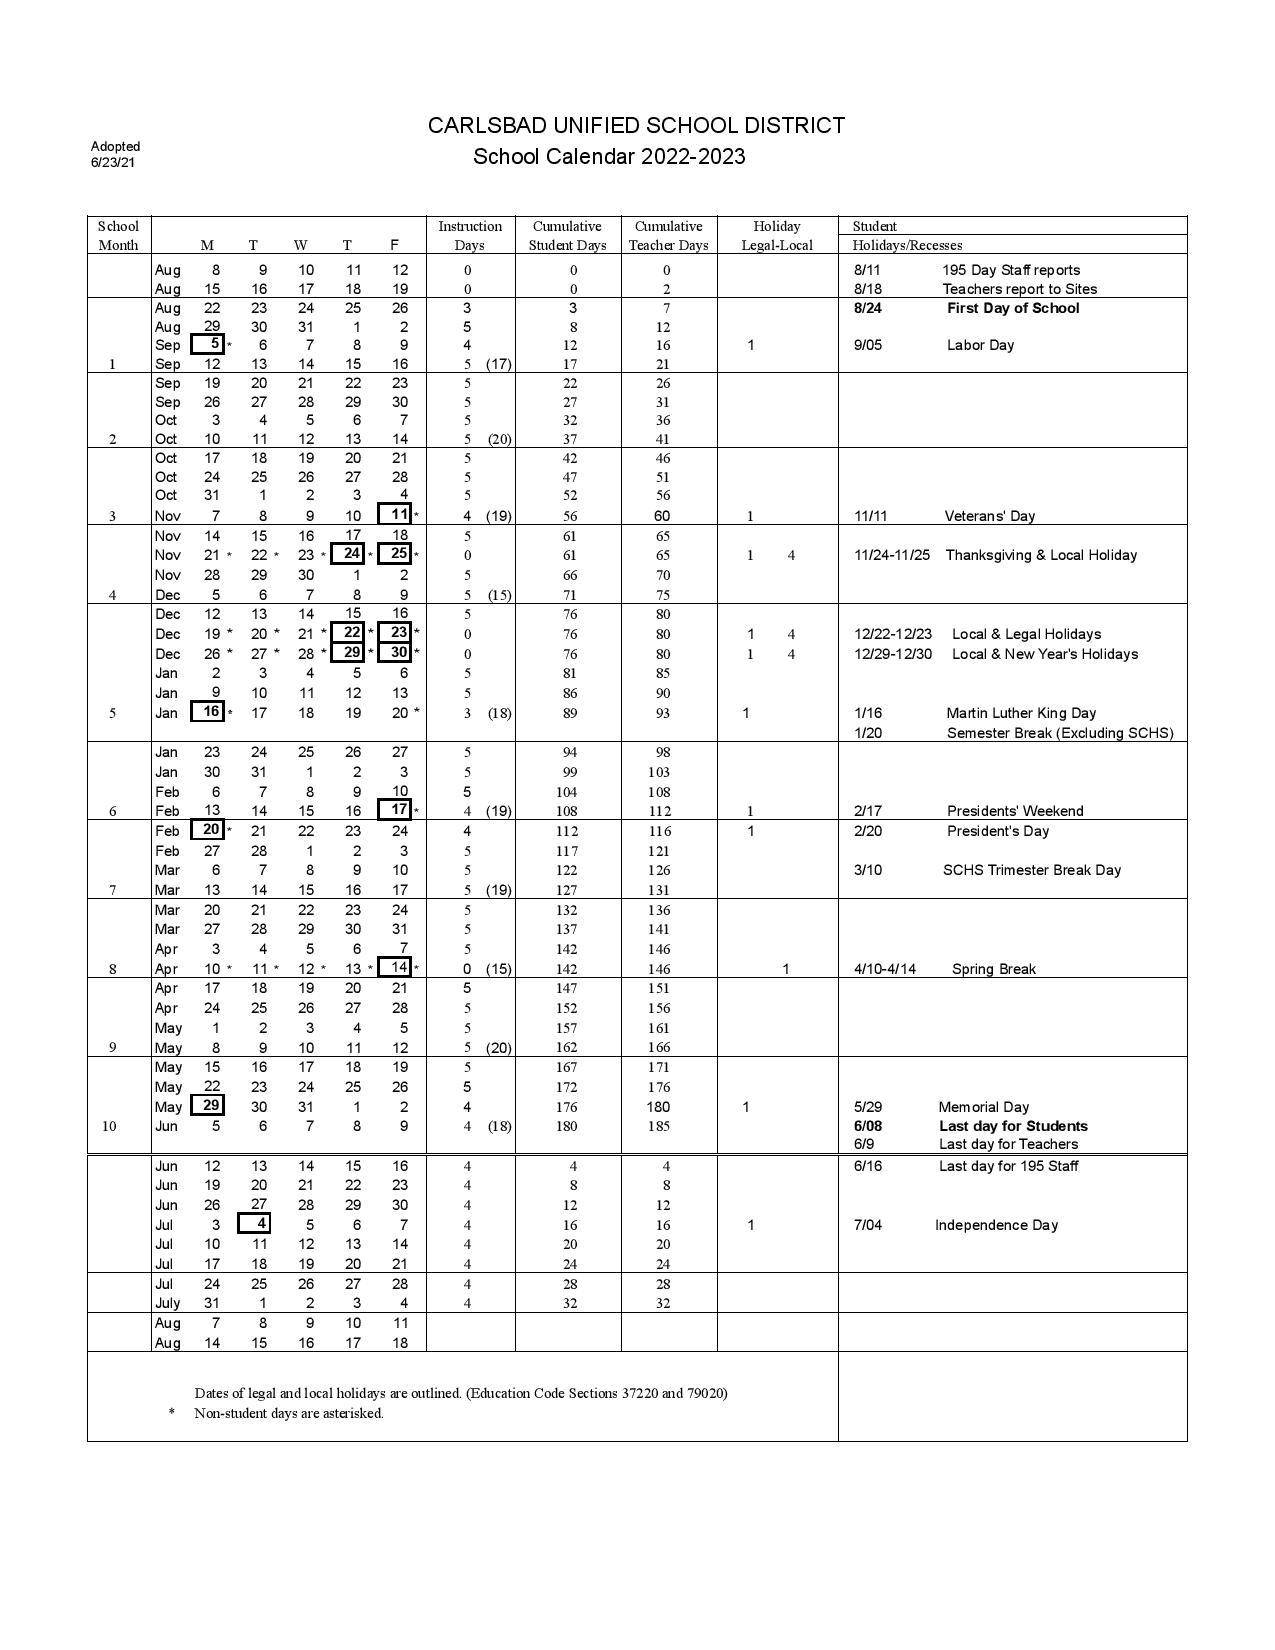 Carlsbad Unified School District Calendar 2022 2023